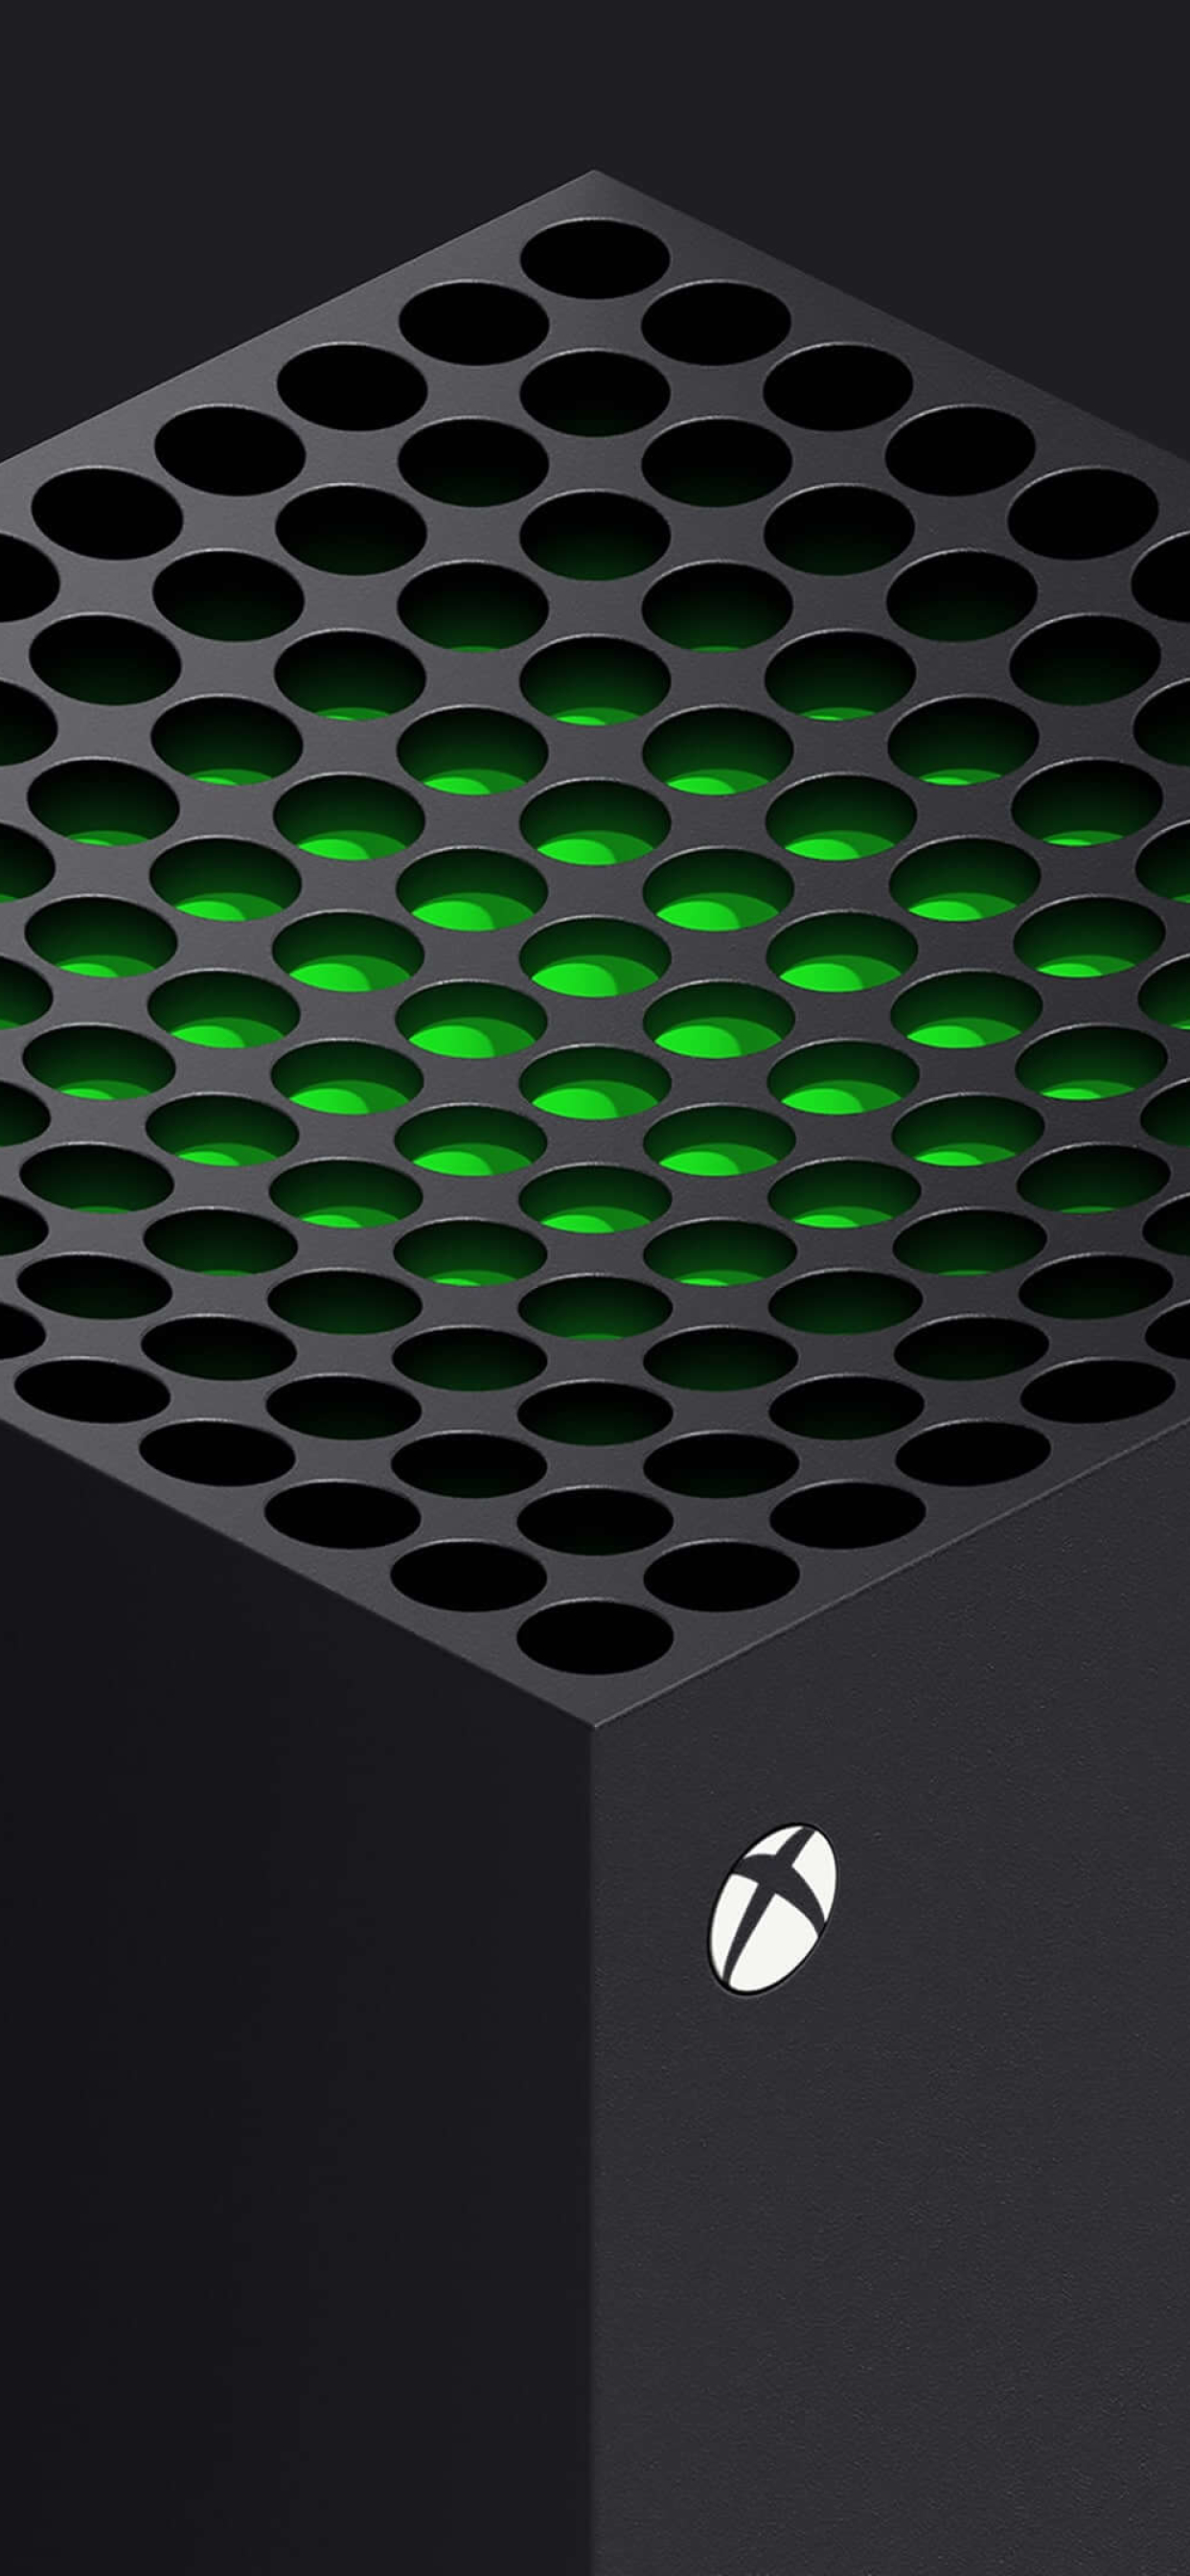 640x960 Xbox 360 simple Iphone 4 wallpaper